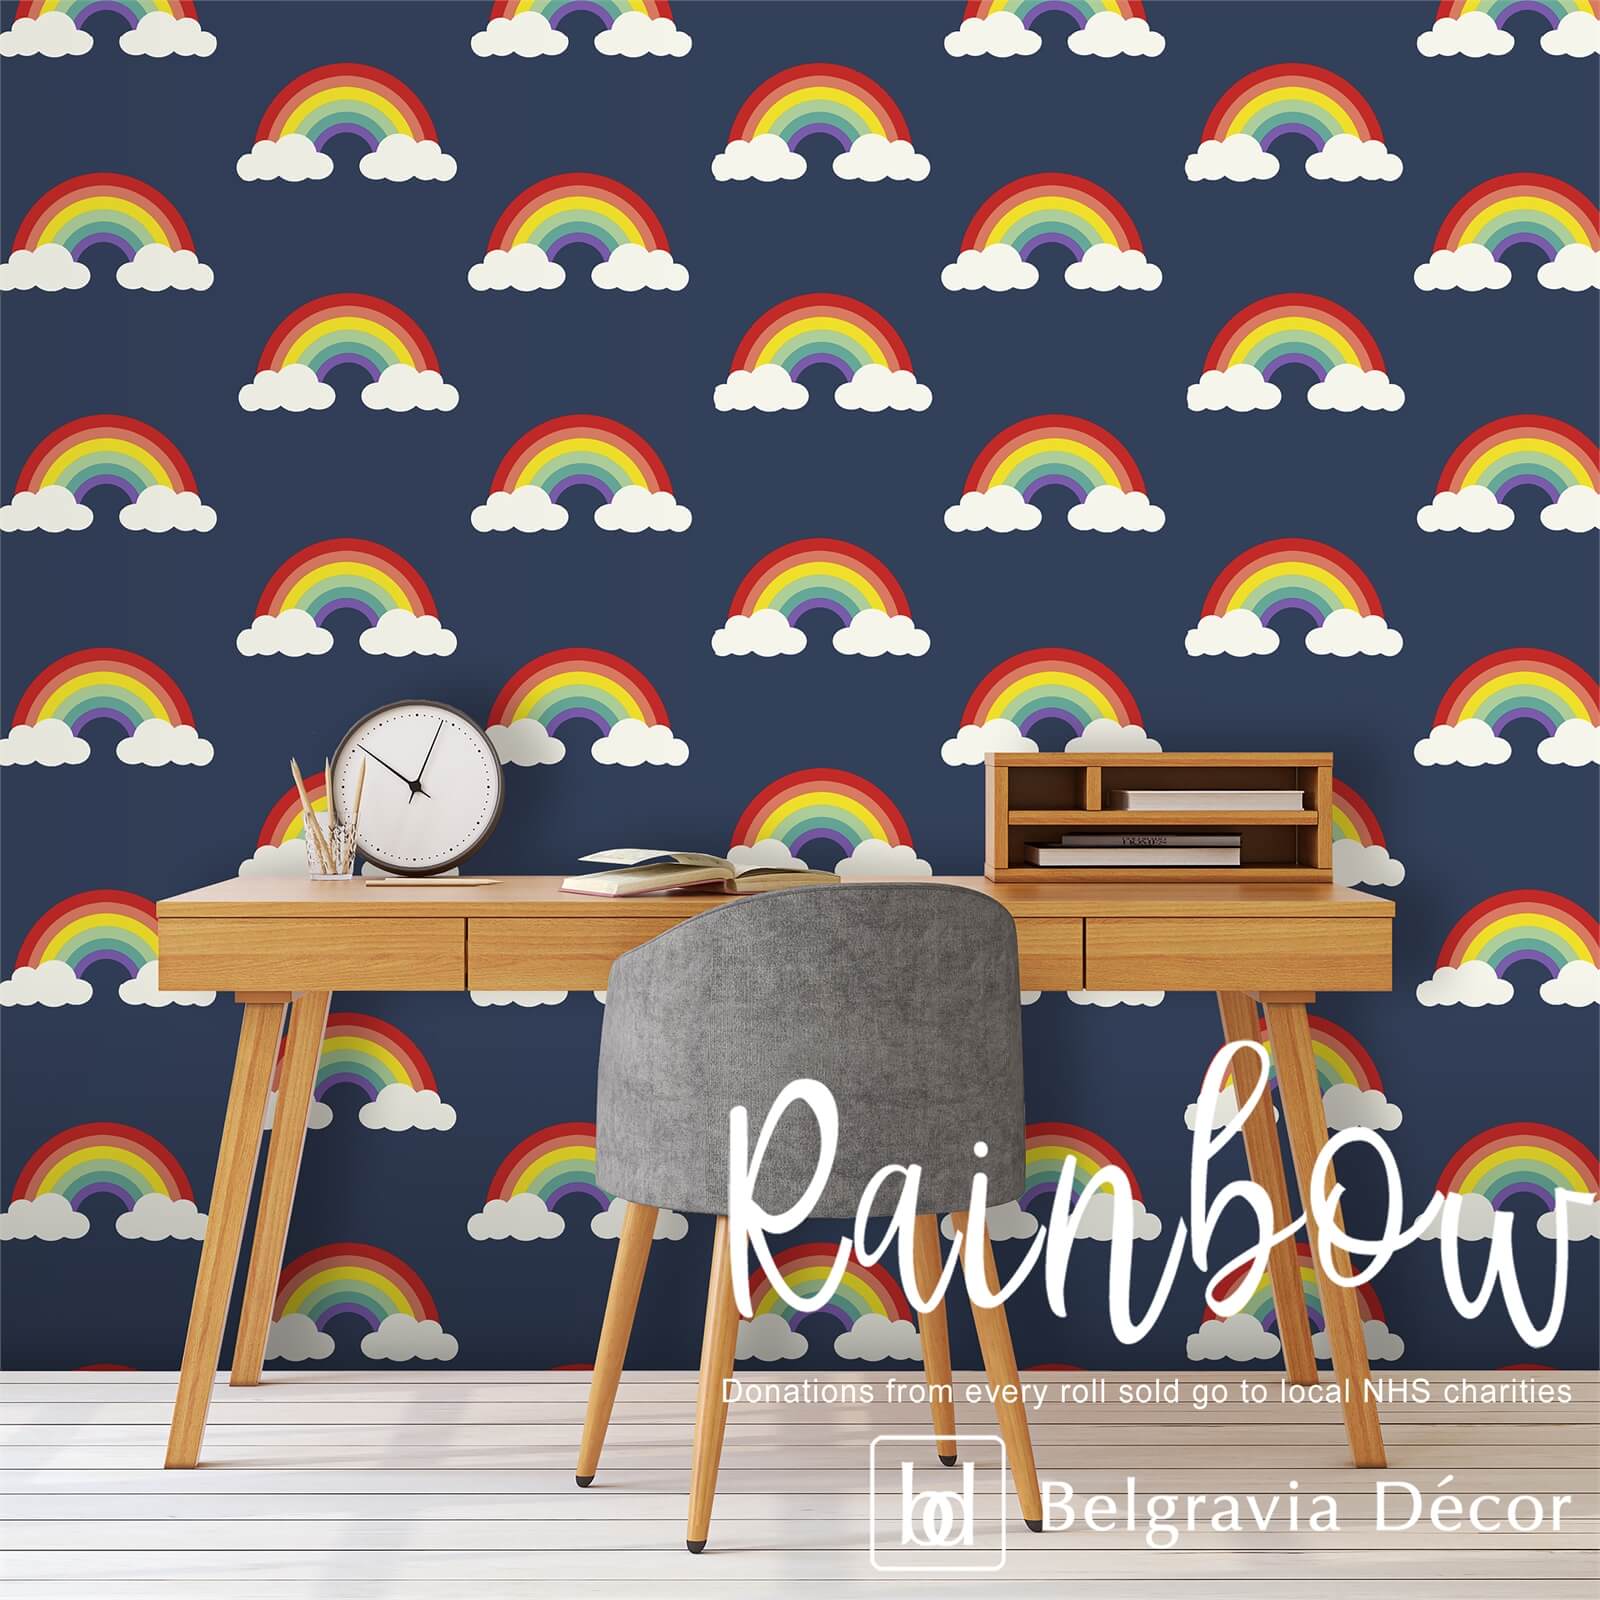 Belgravia Decor Rainbow Navy Wallpaper (supporting NHS charities)